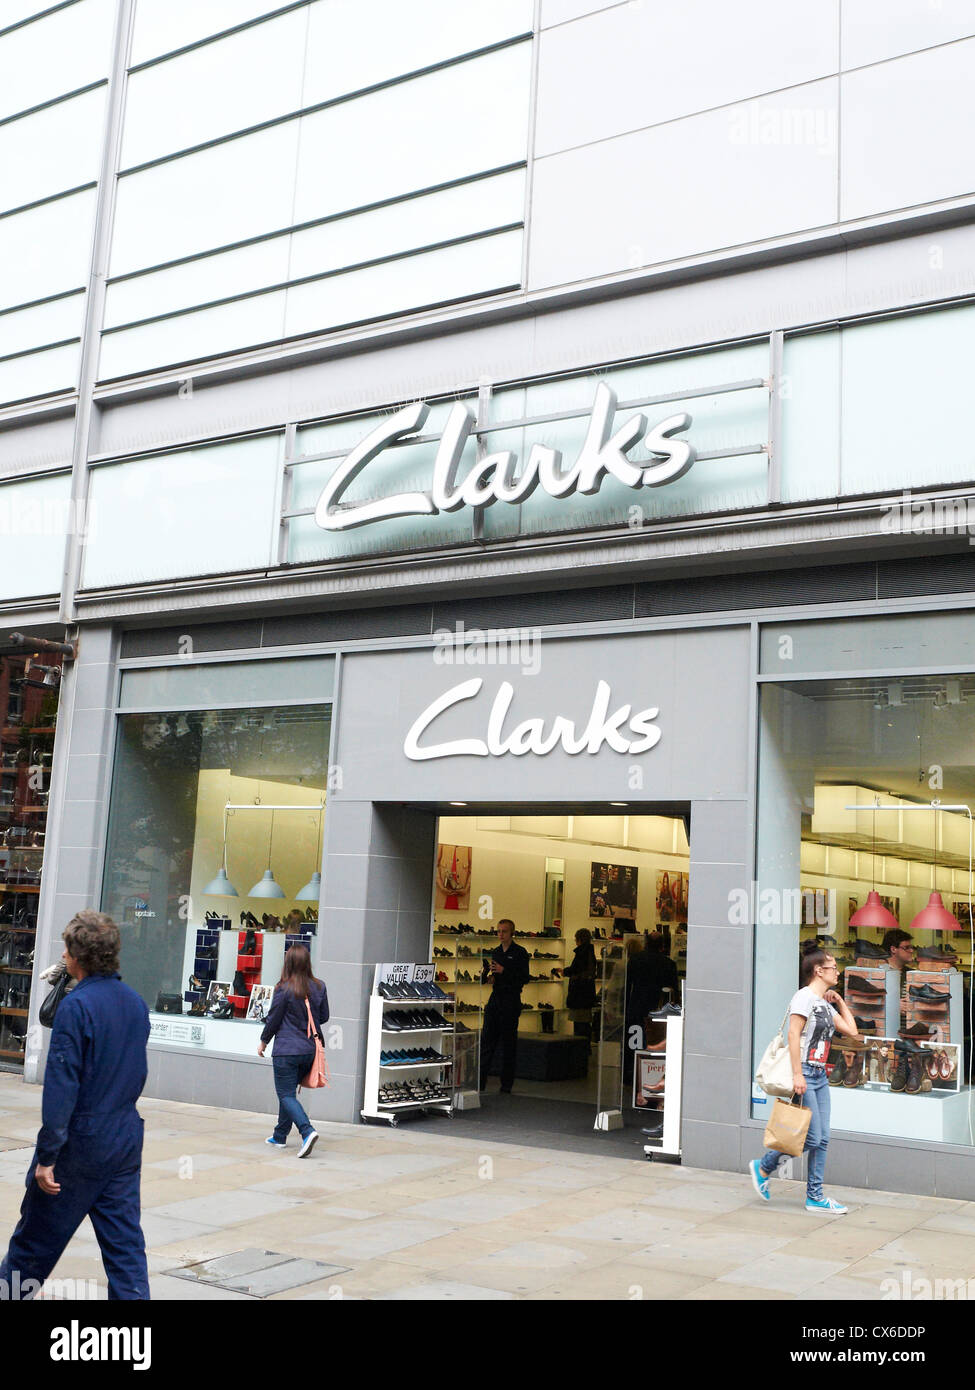 Clarks shop on Market Street Manchester UK Stock Photo - Alamy